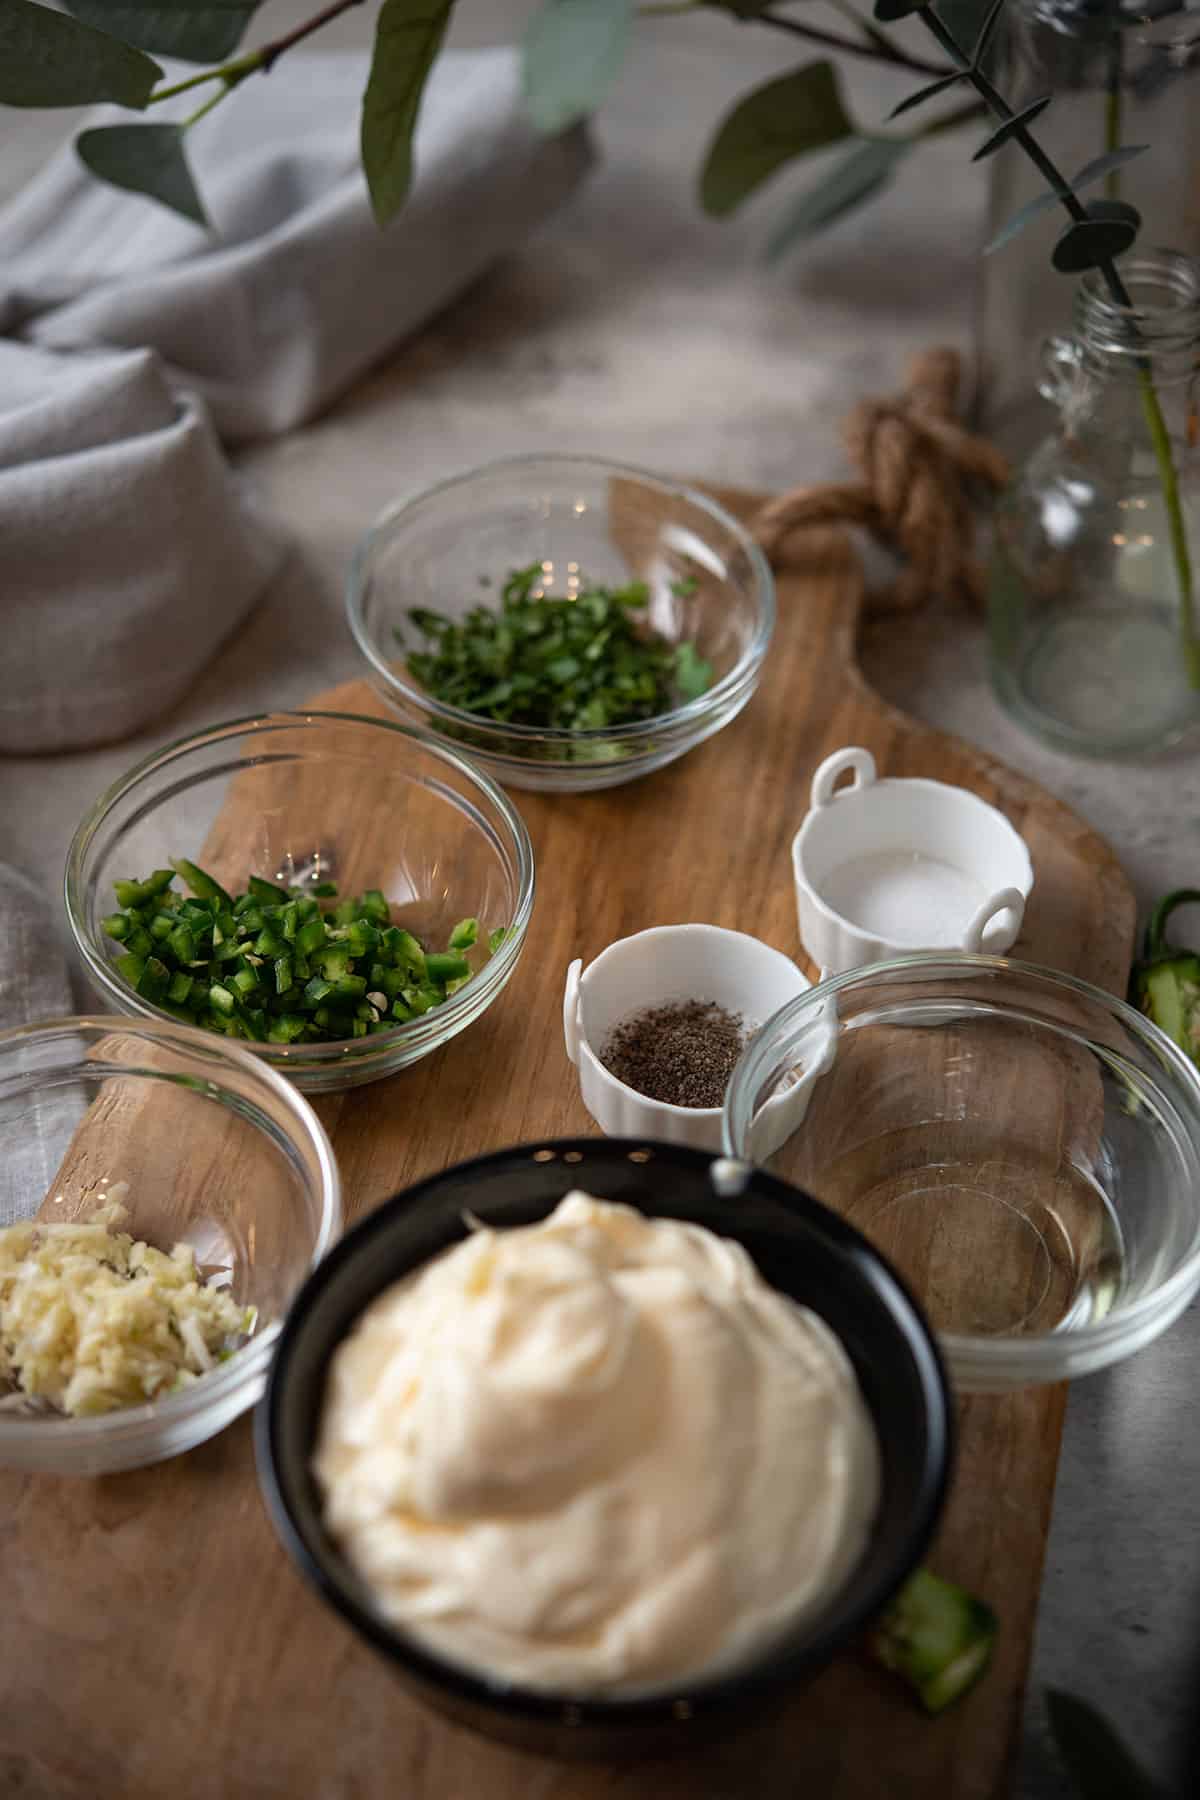 ingredients kept ready in bowls